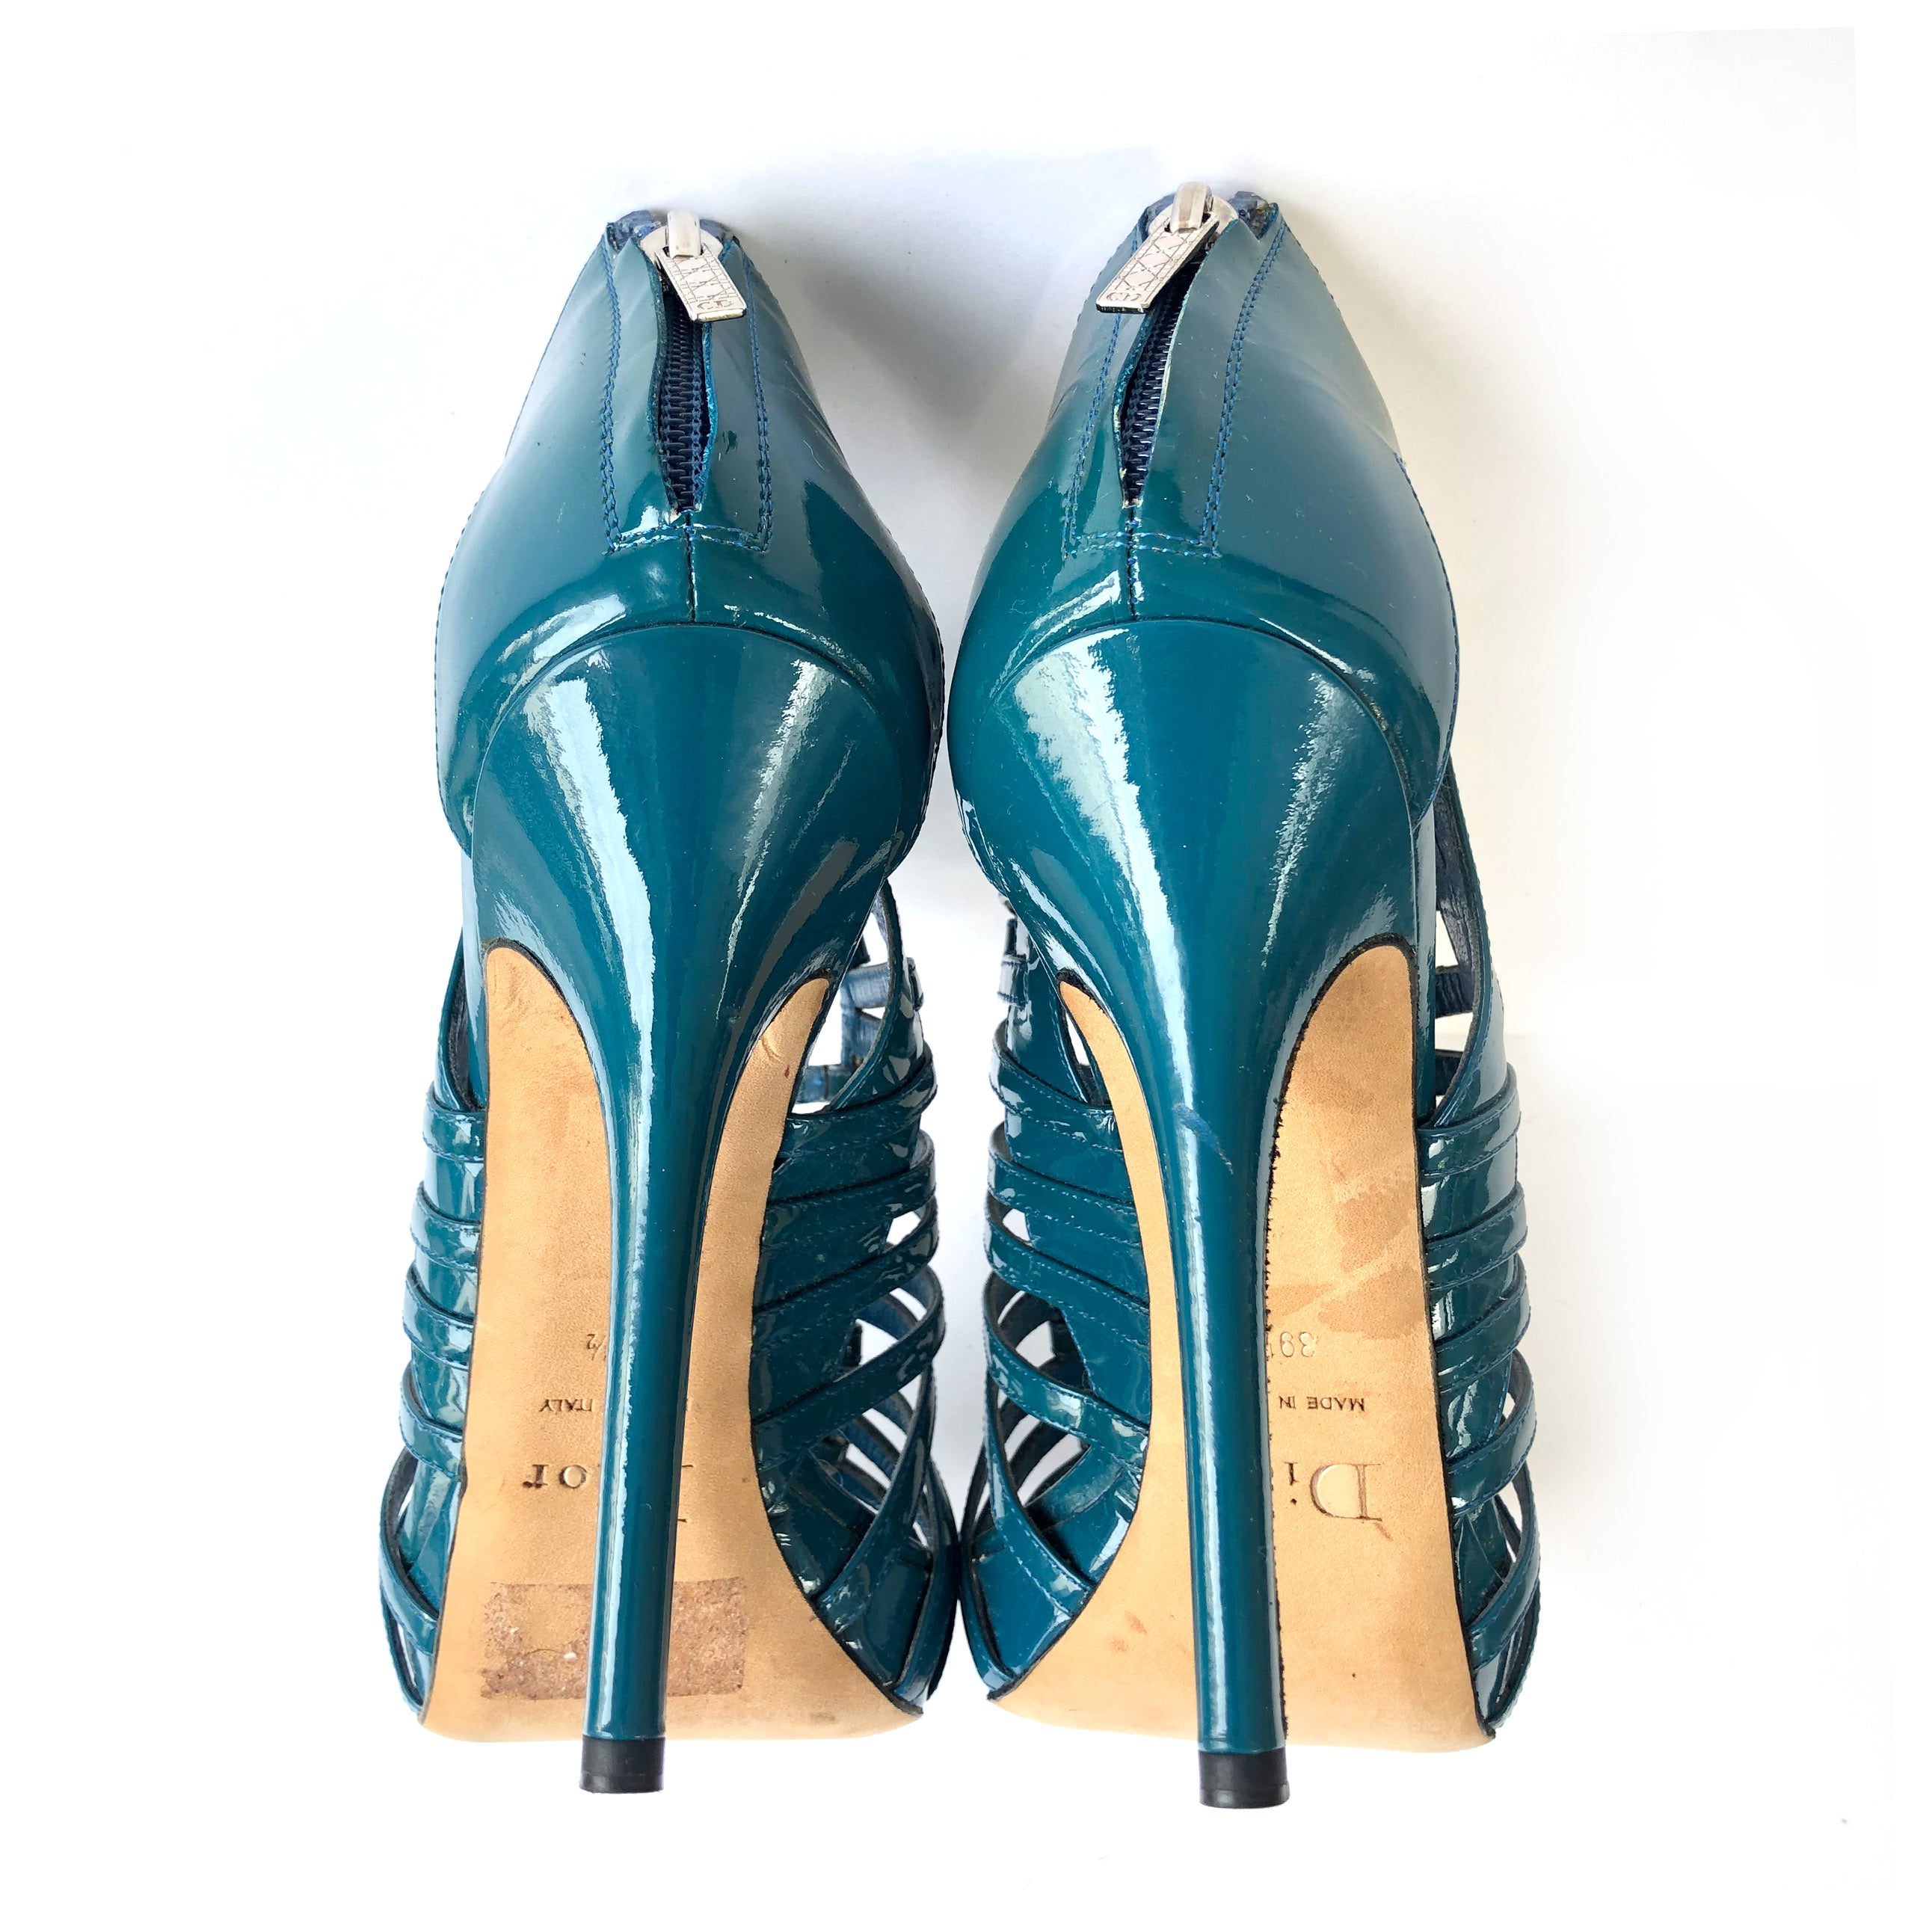 ♢Dior High Heels | Heels, High heels images, Fashion shoes